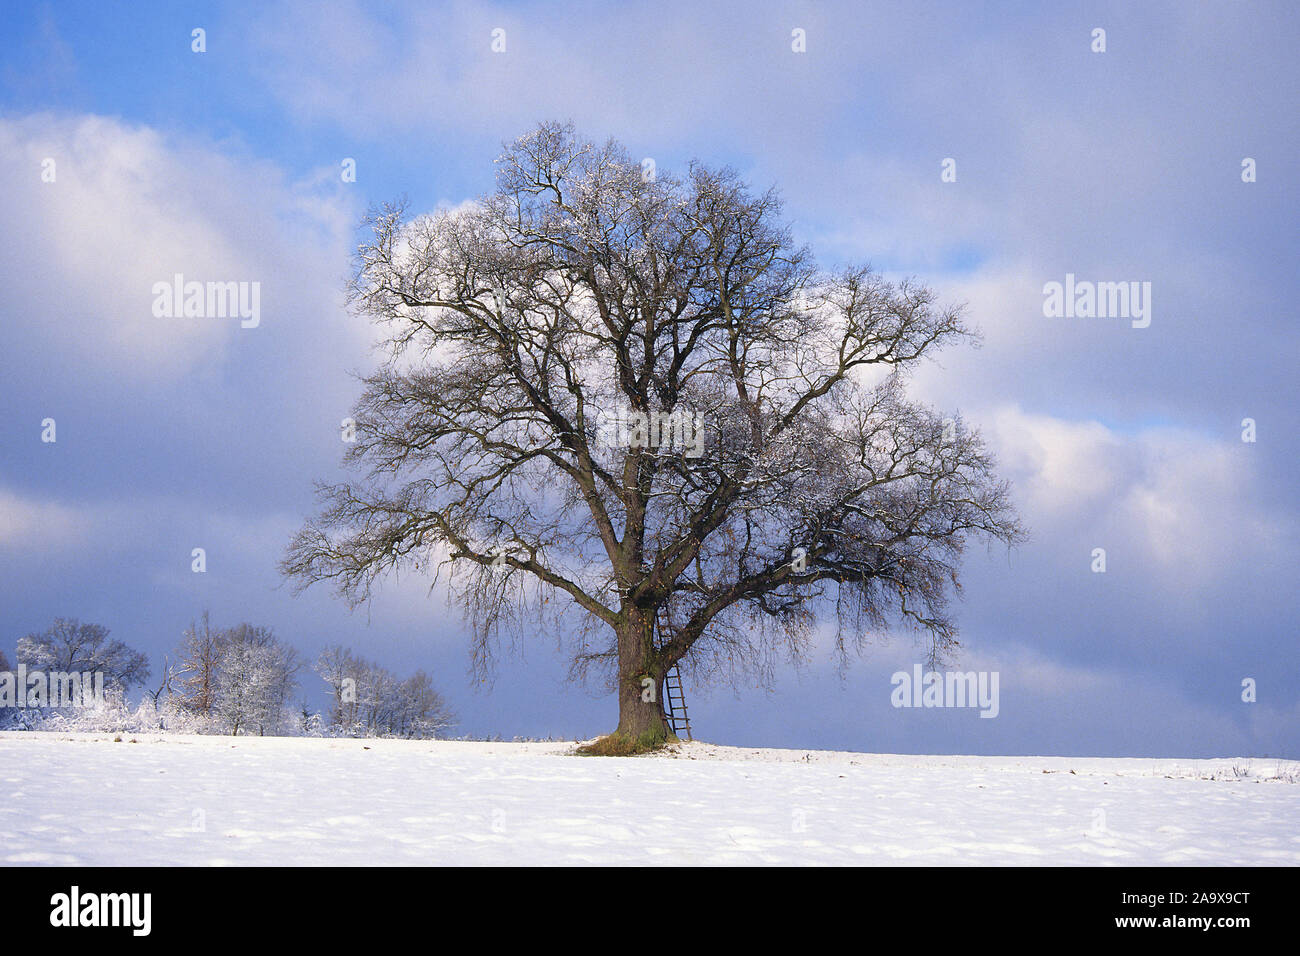 Stieleiche im Winter - Quercus robur Stock Photo